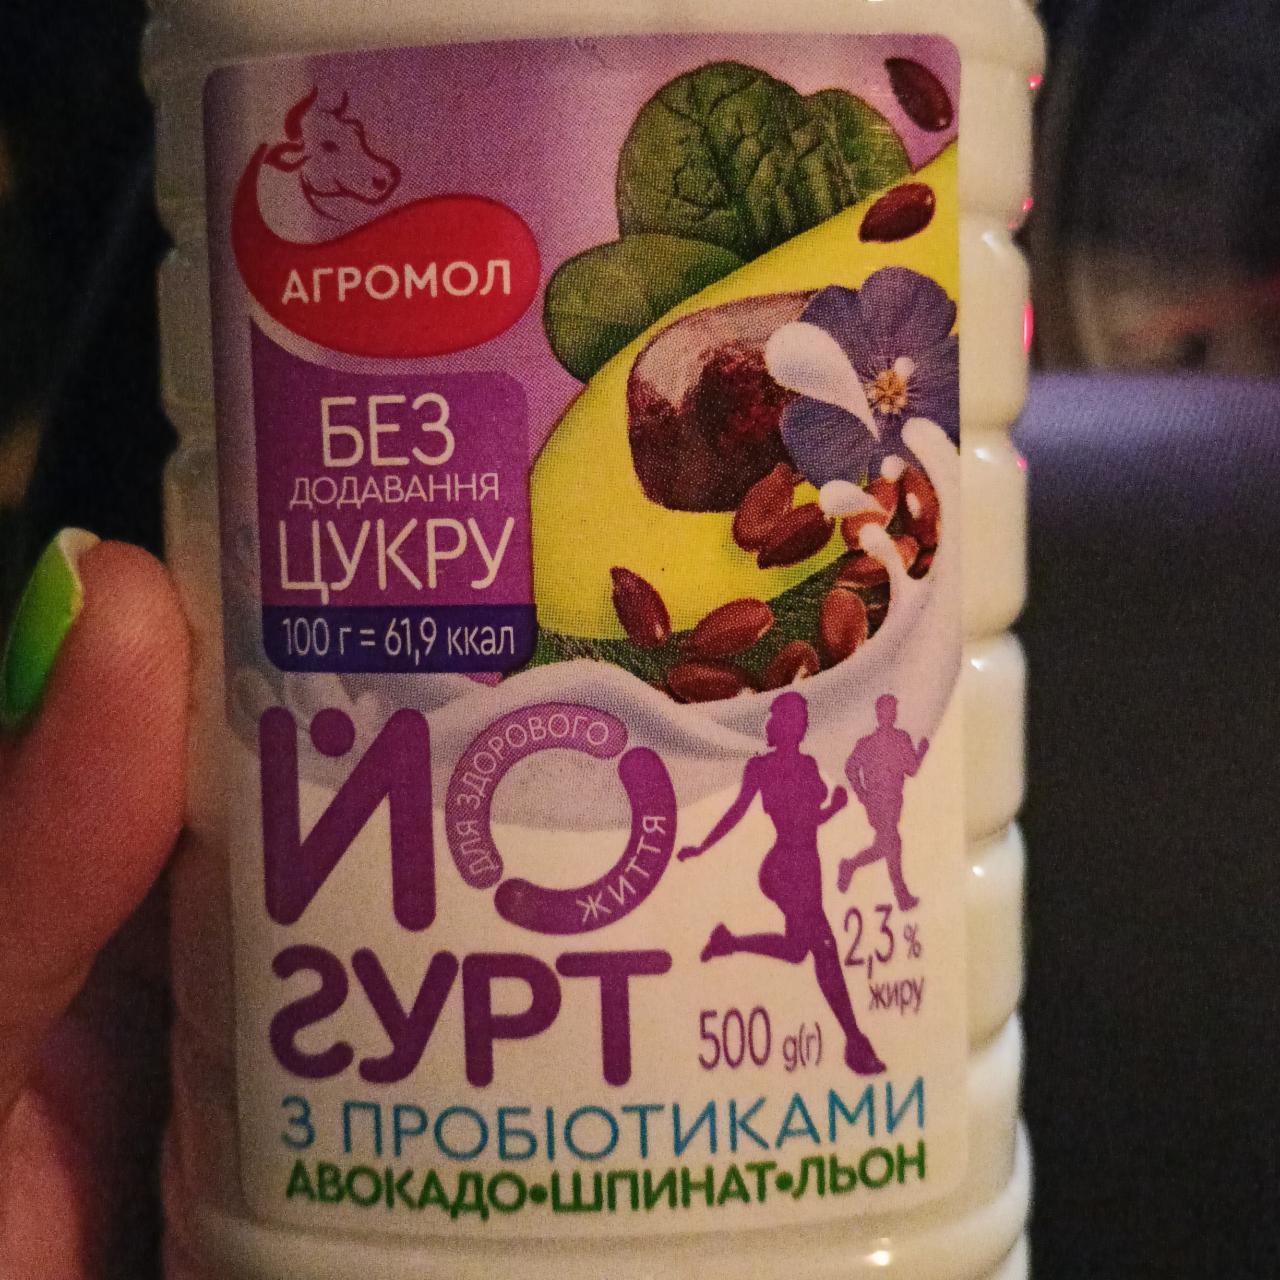 Фото - Йогурт с пробиотиками Авокадо, Шпинат, лён 2.3 % Агромол